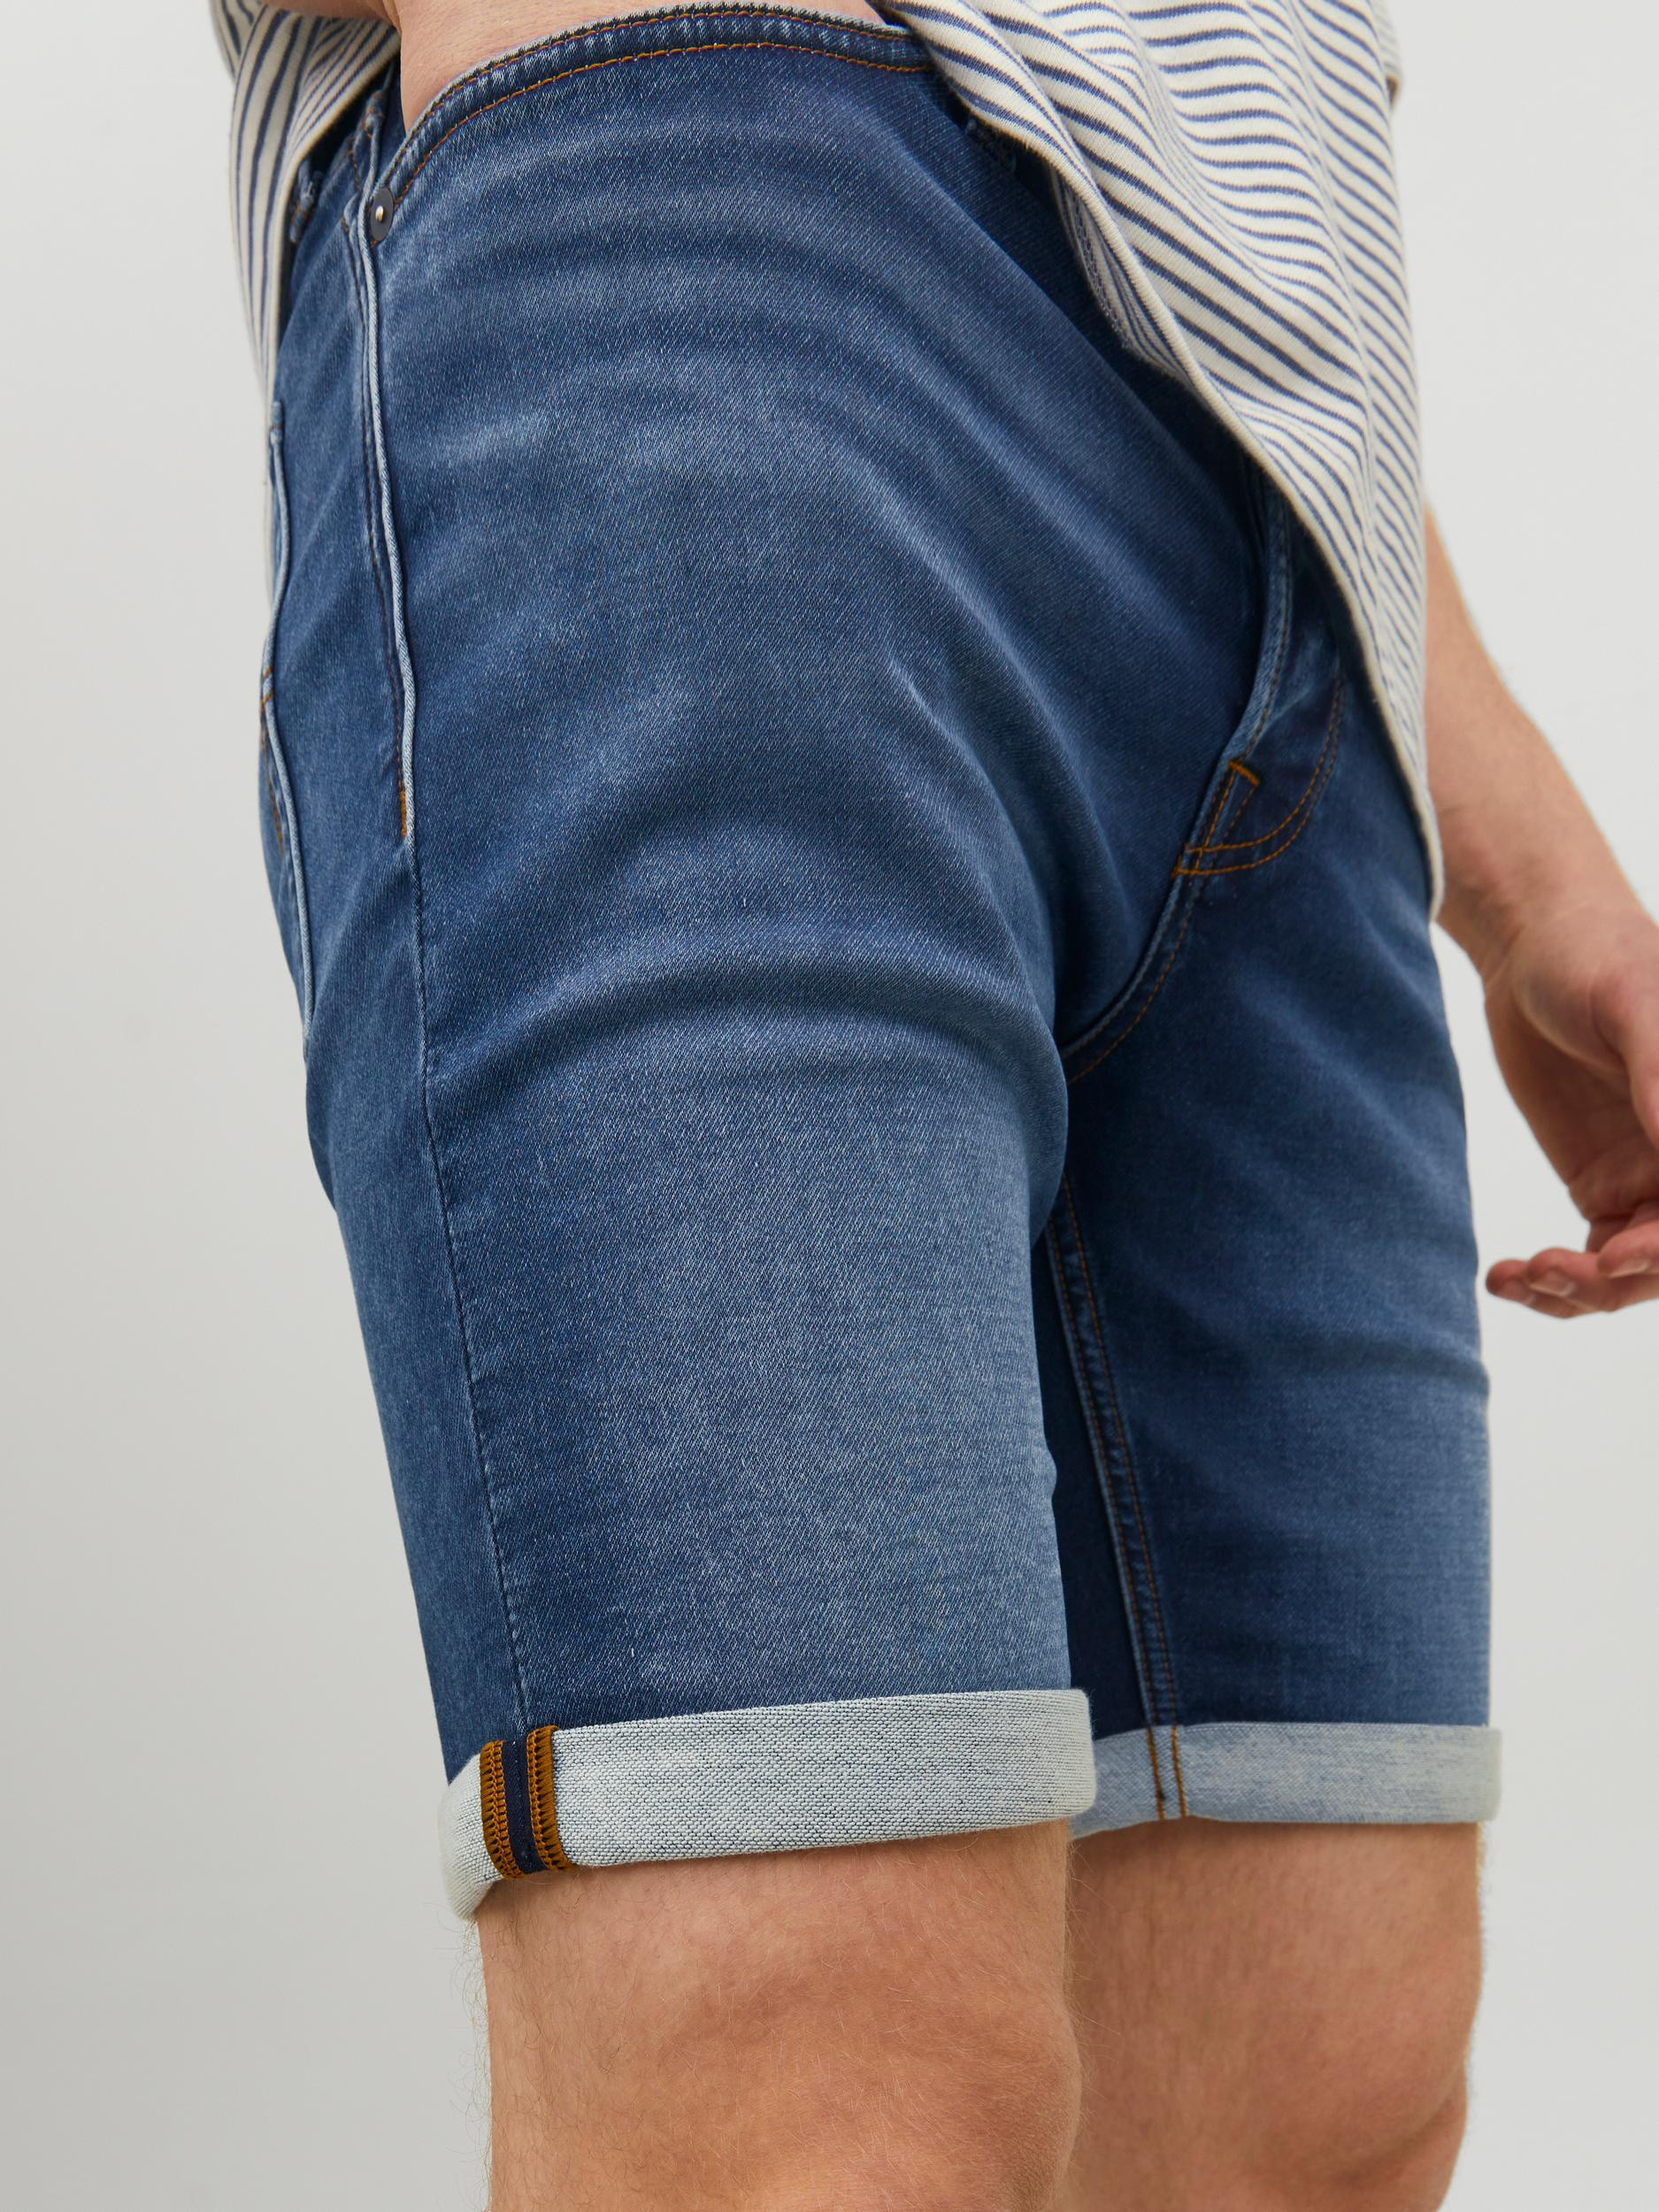 Jack & Jones - Bermuda cinque tasche in jeans, Denim, large image number 2